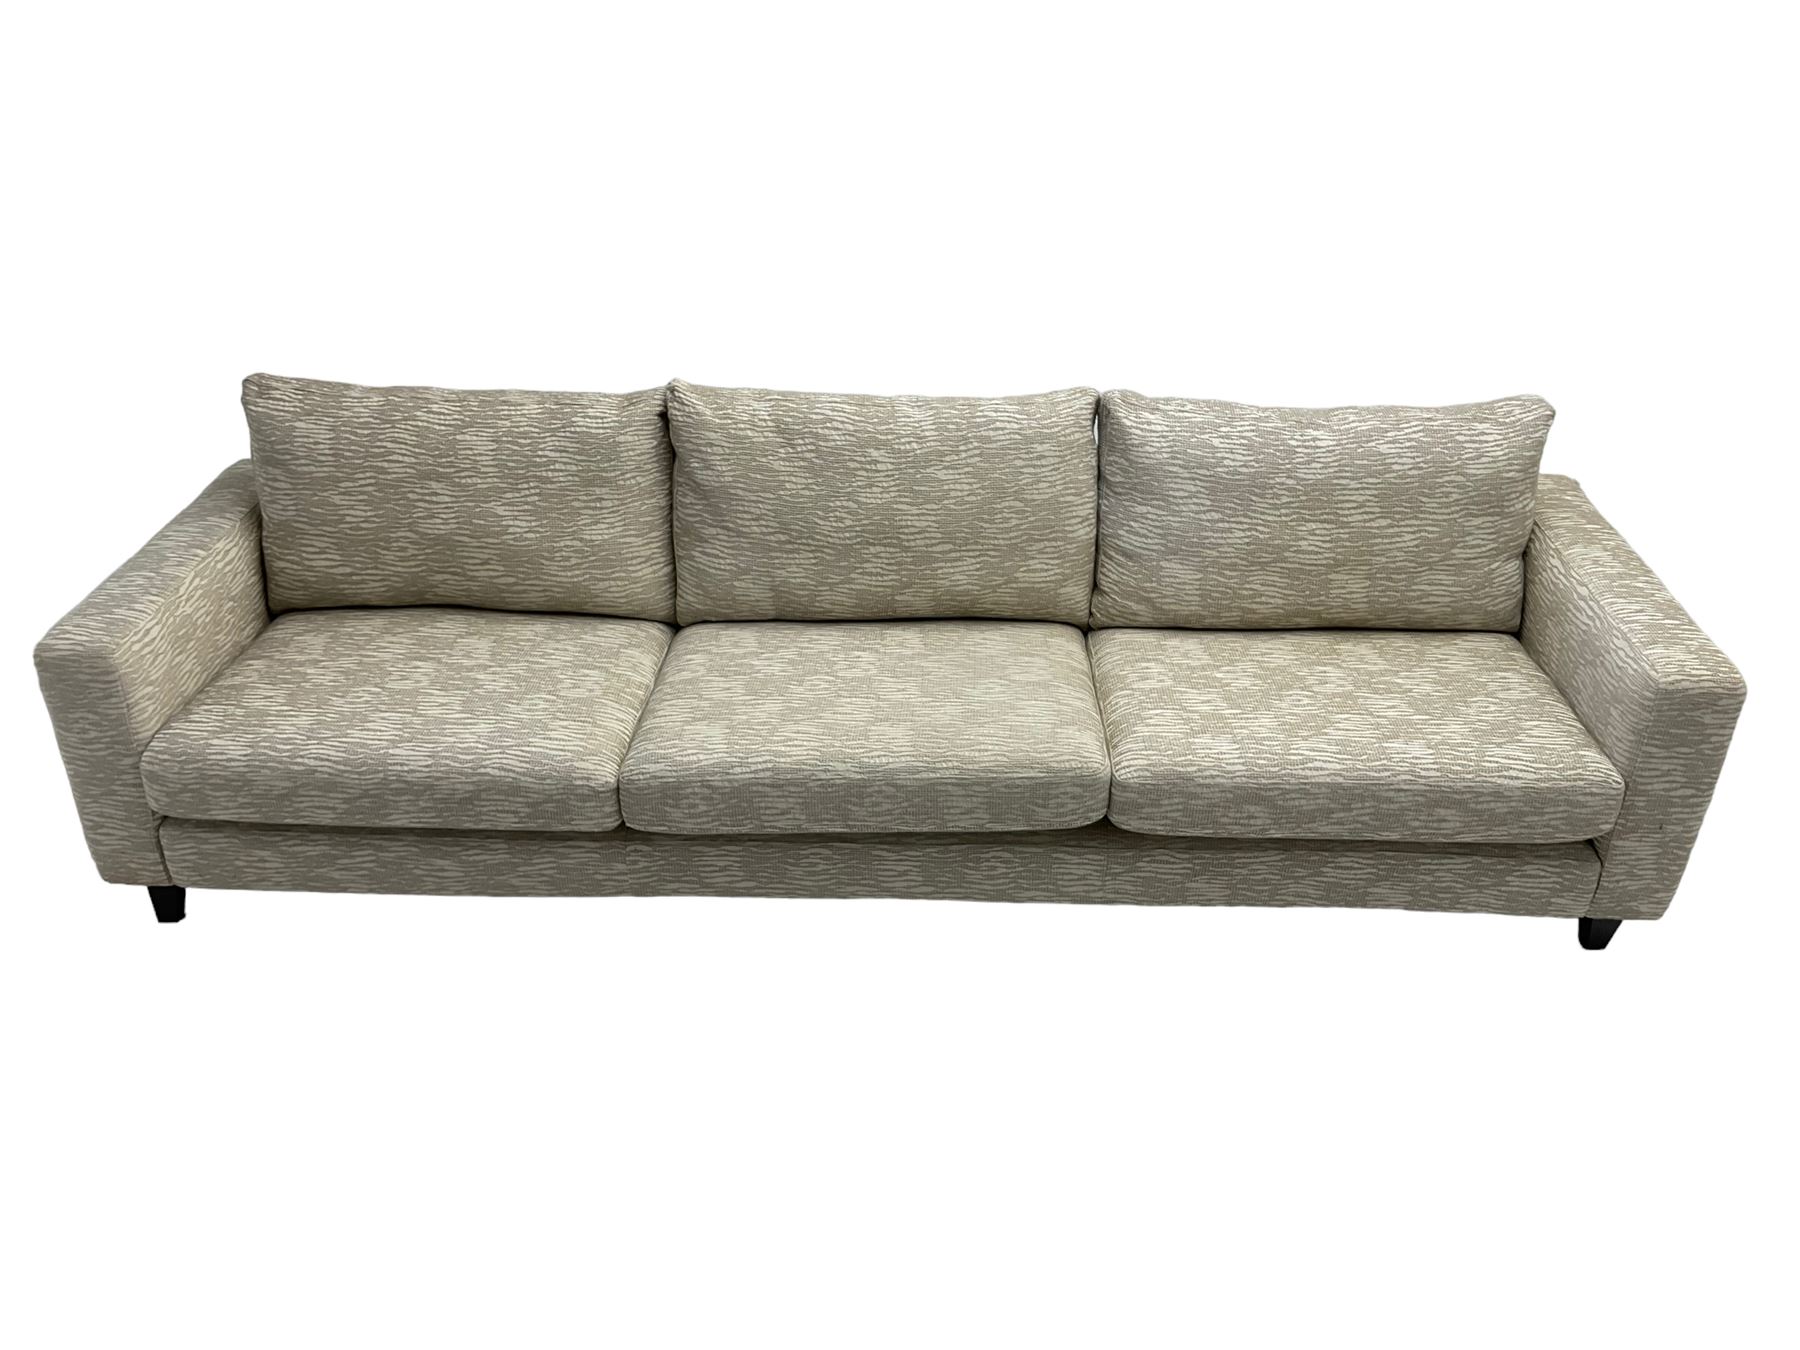 Orior - contemporary large three seat sofa - Image 5 of 7